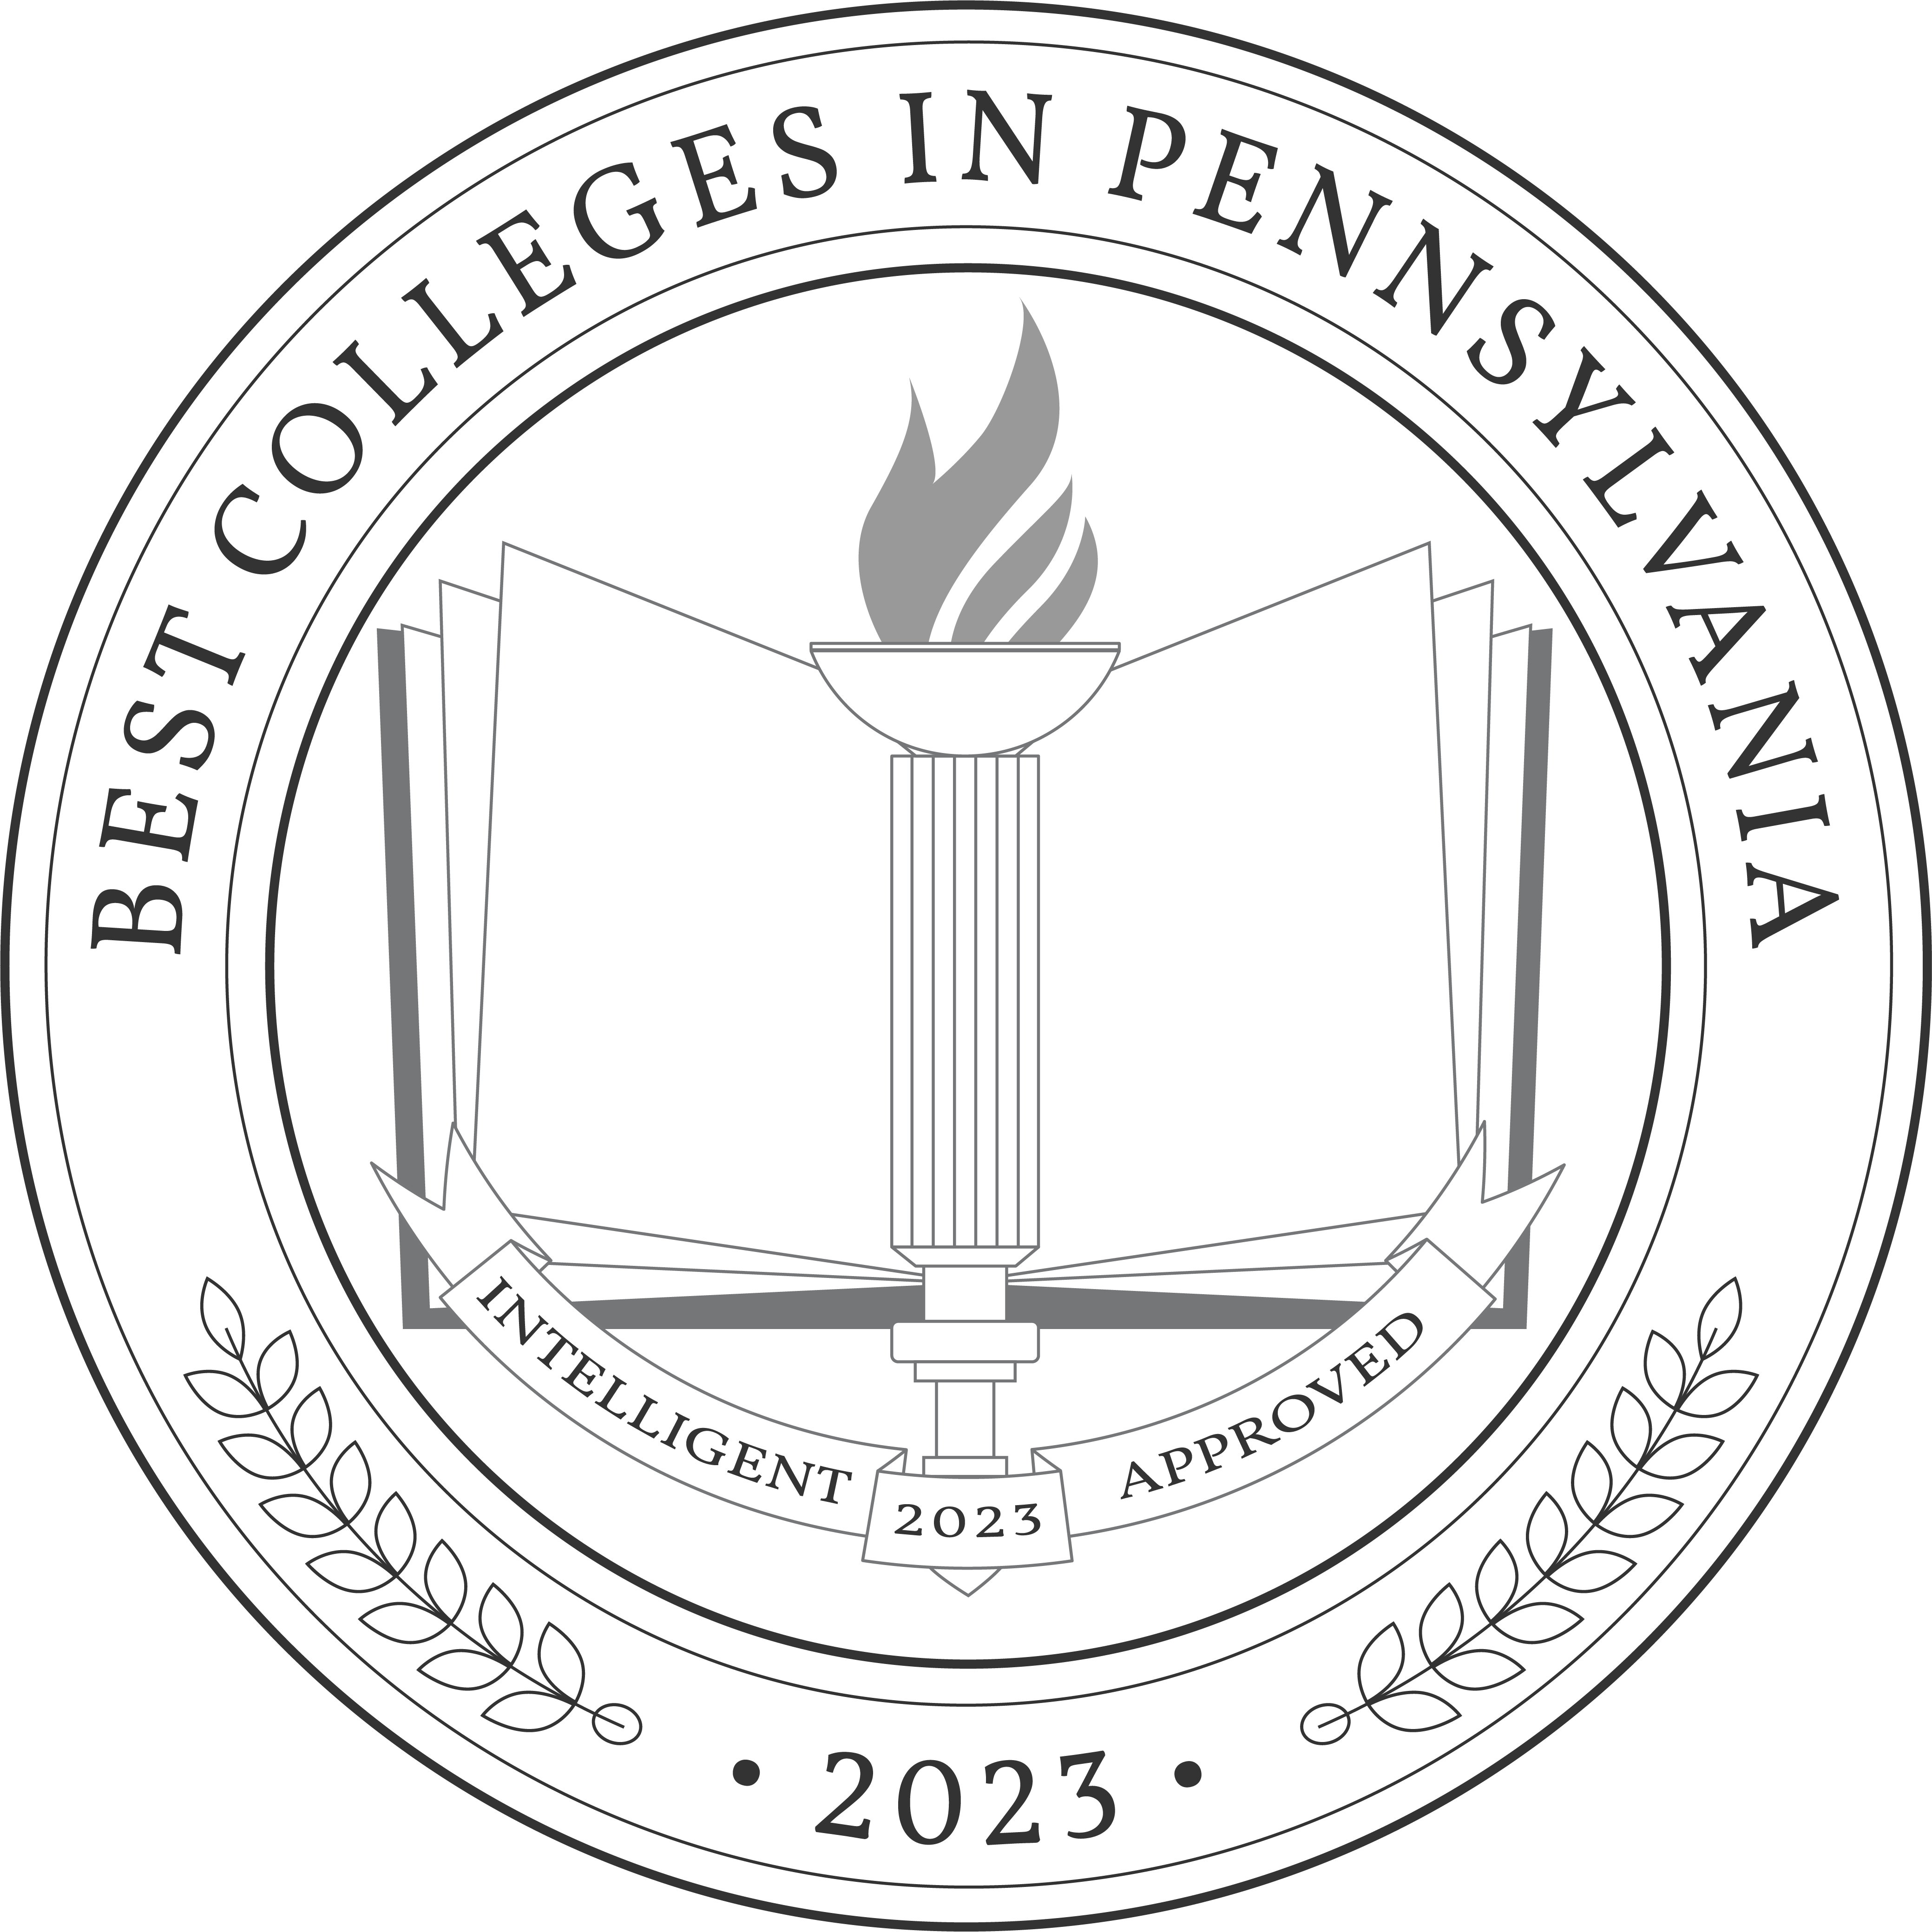 Best Colleges in Pennsylvania 2023 Badge